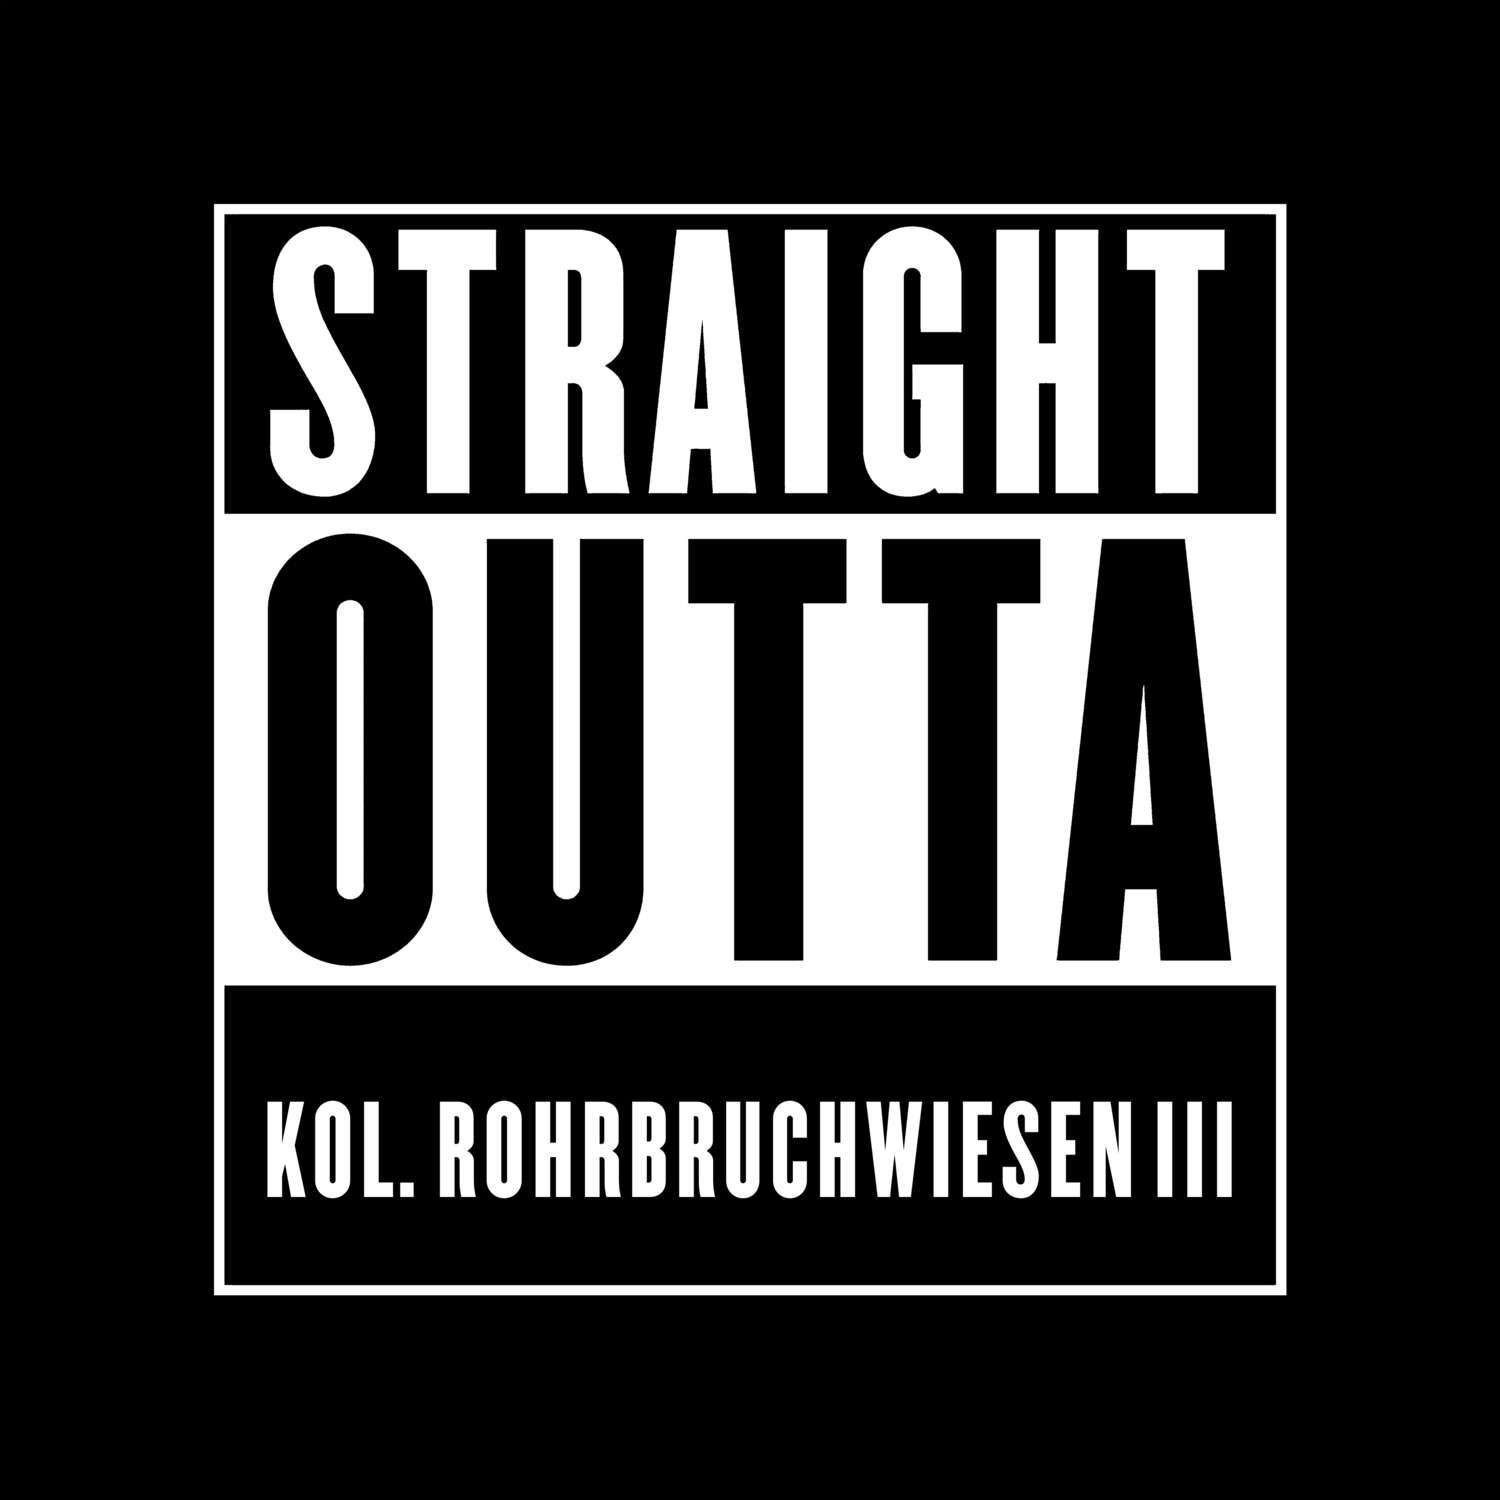 Kol. Rohrbruchwiesen III T-Shirt »Straight Outta«